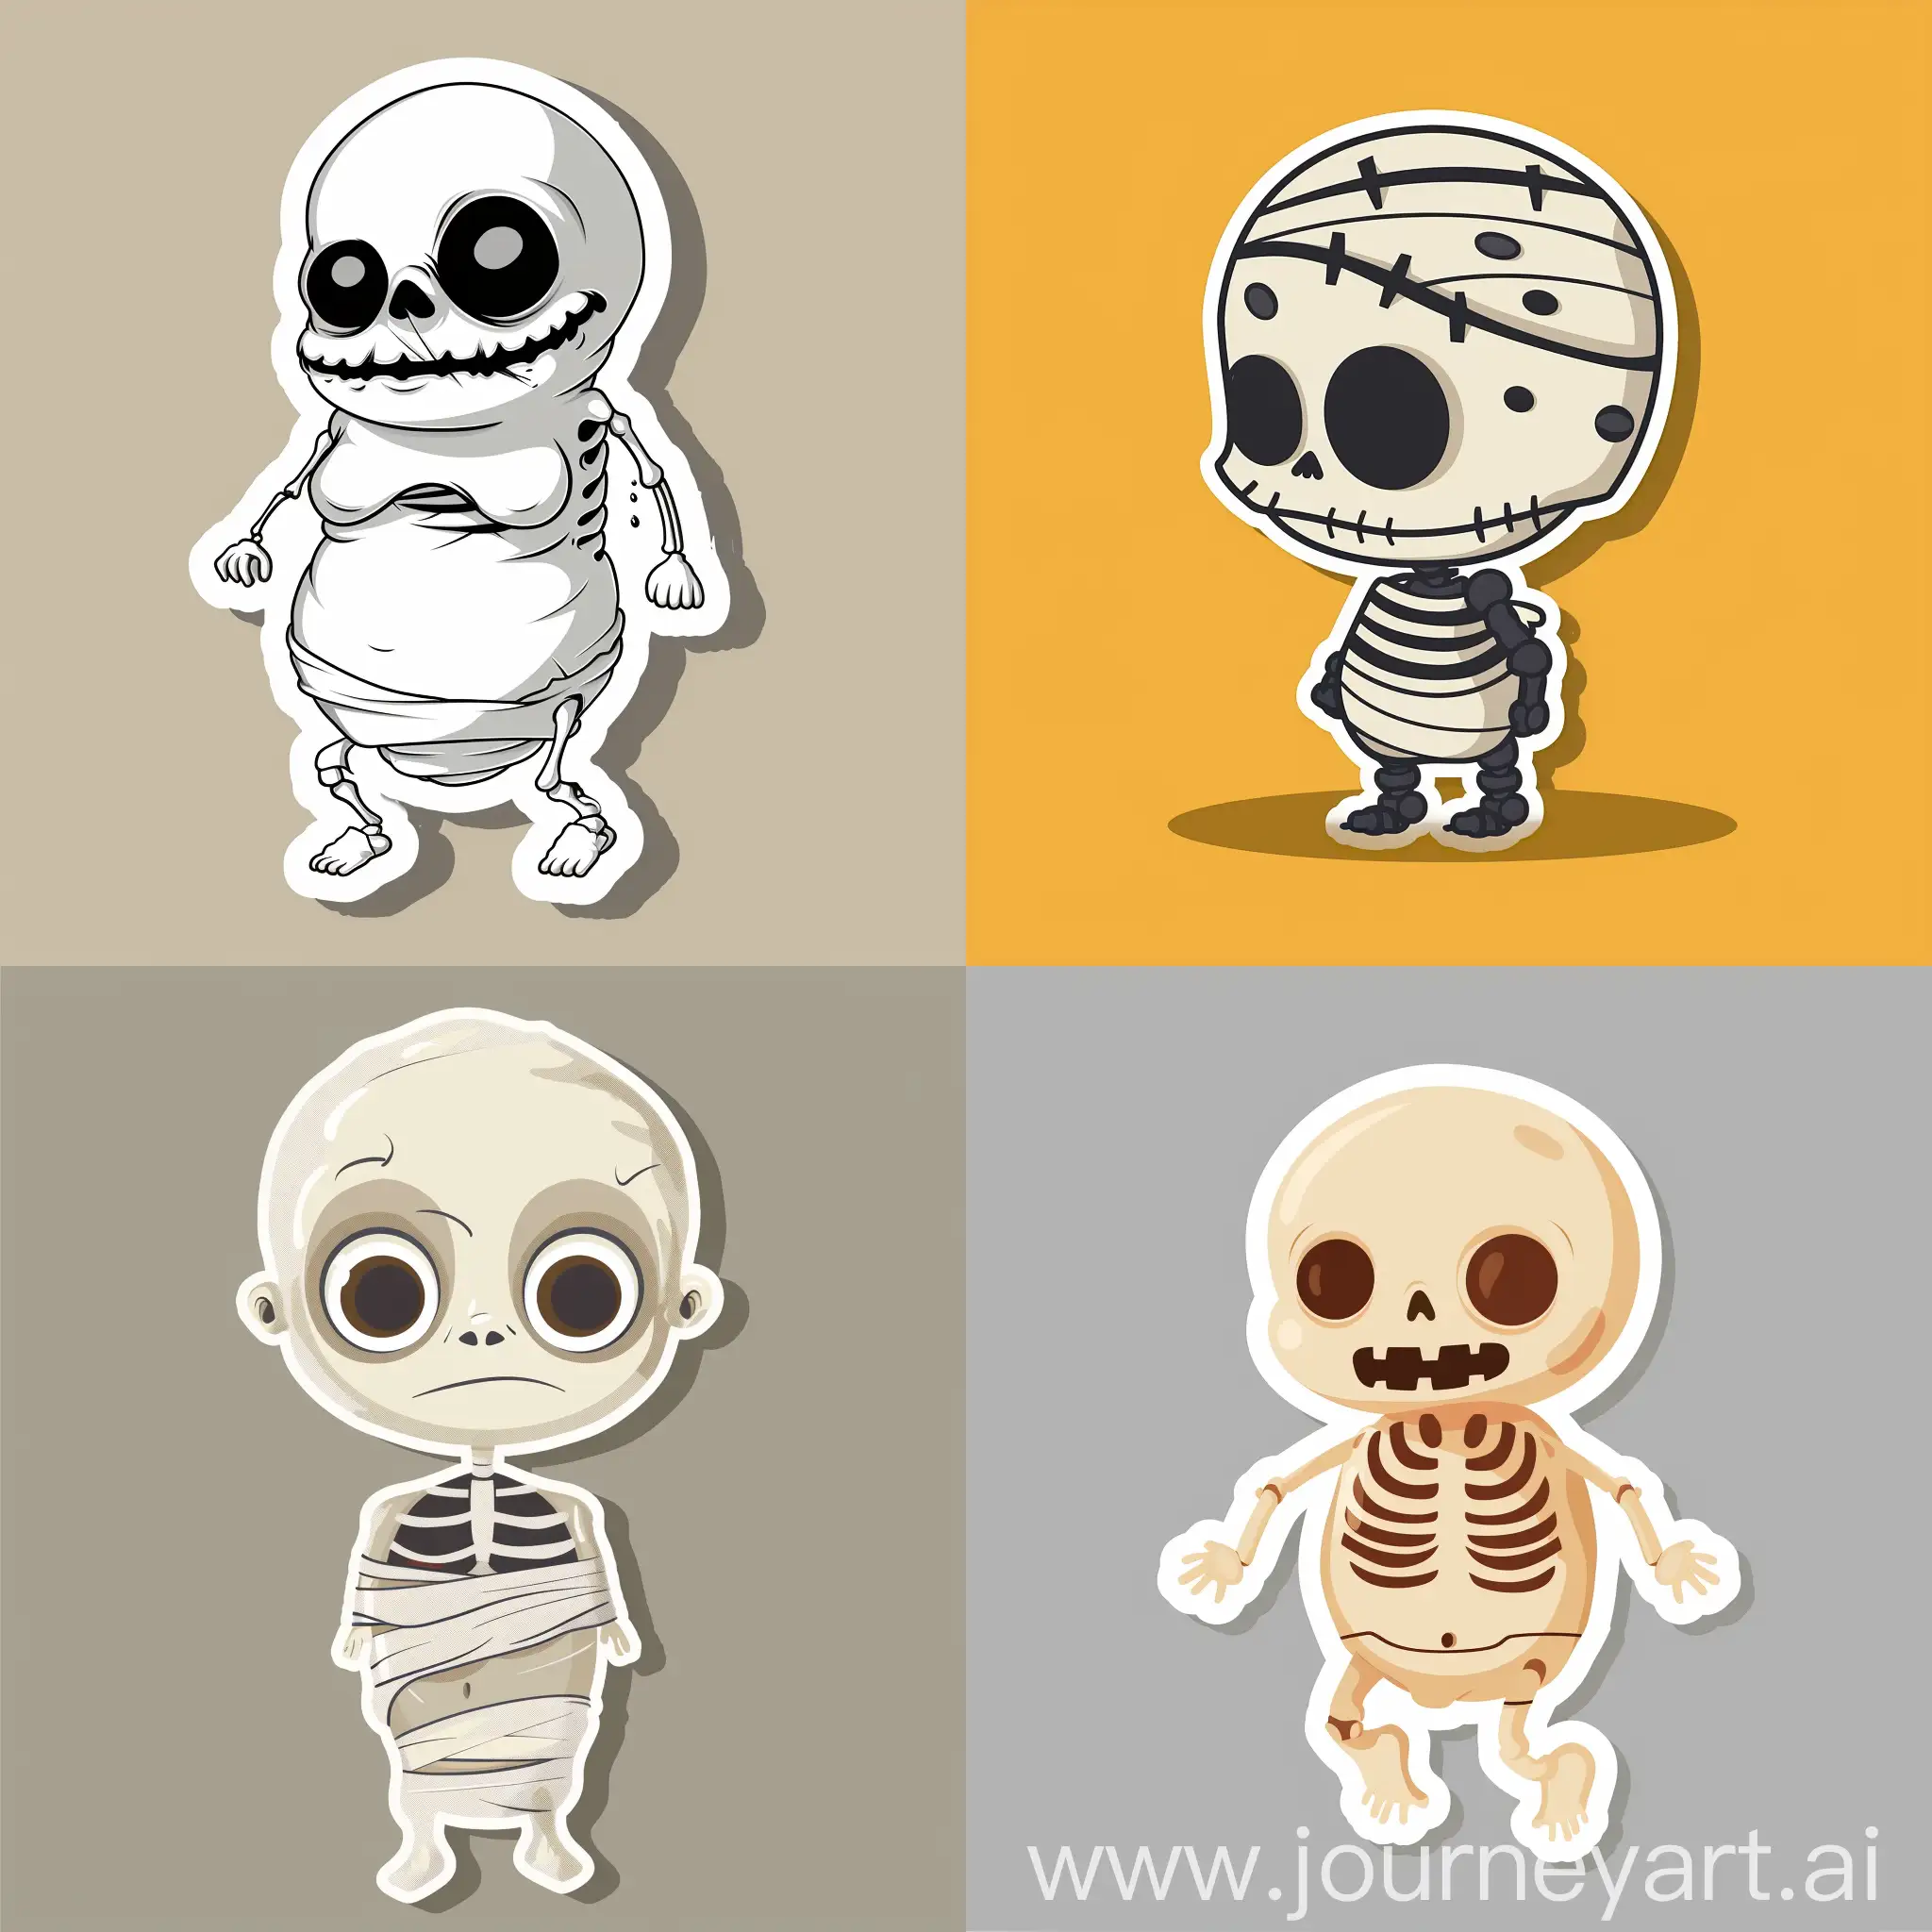 cartoon sticker design of tim burton style cute baby mummy, full body, flat style